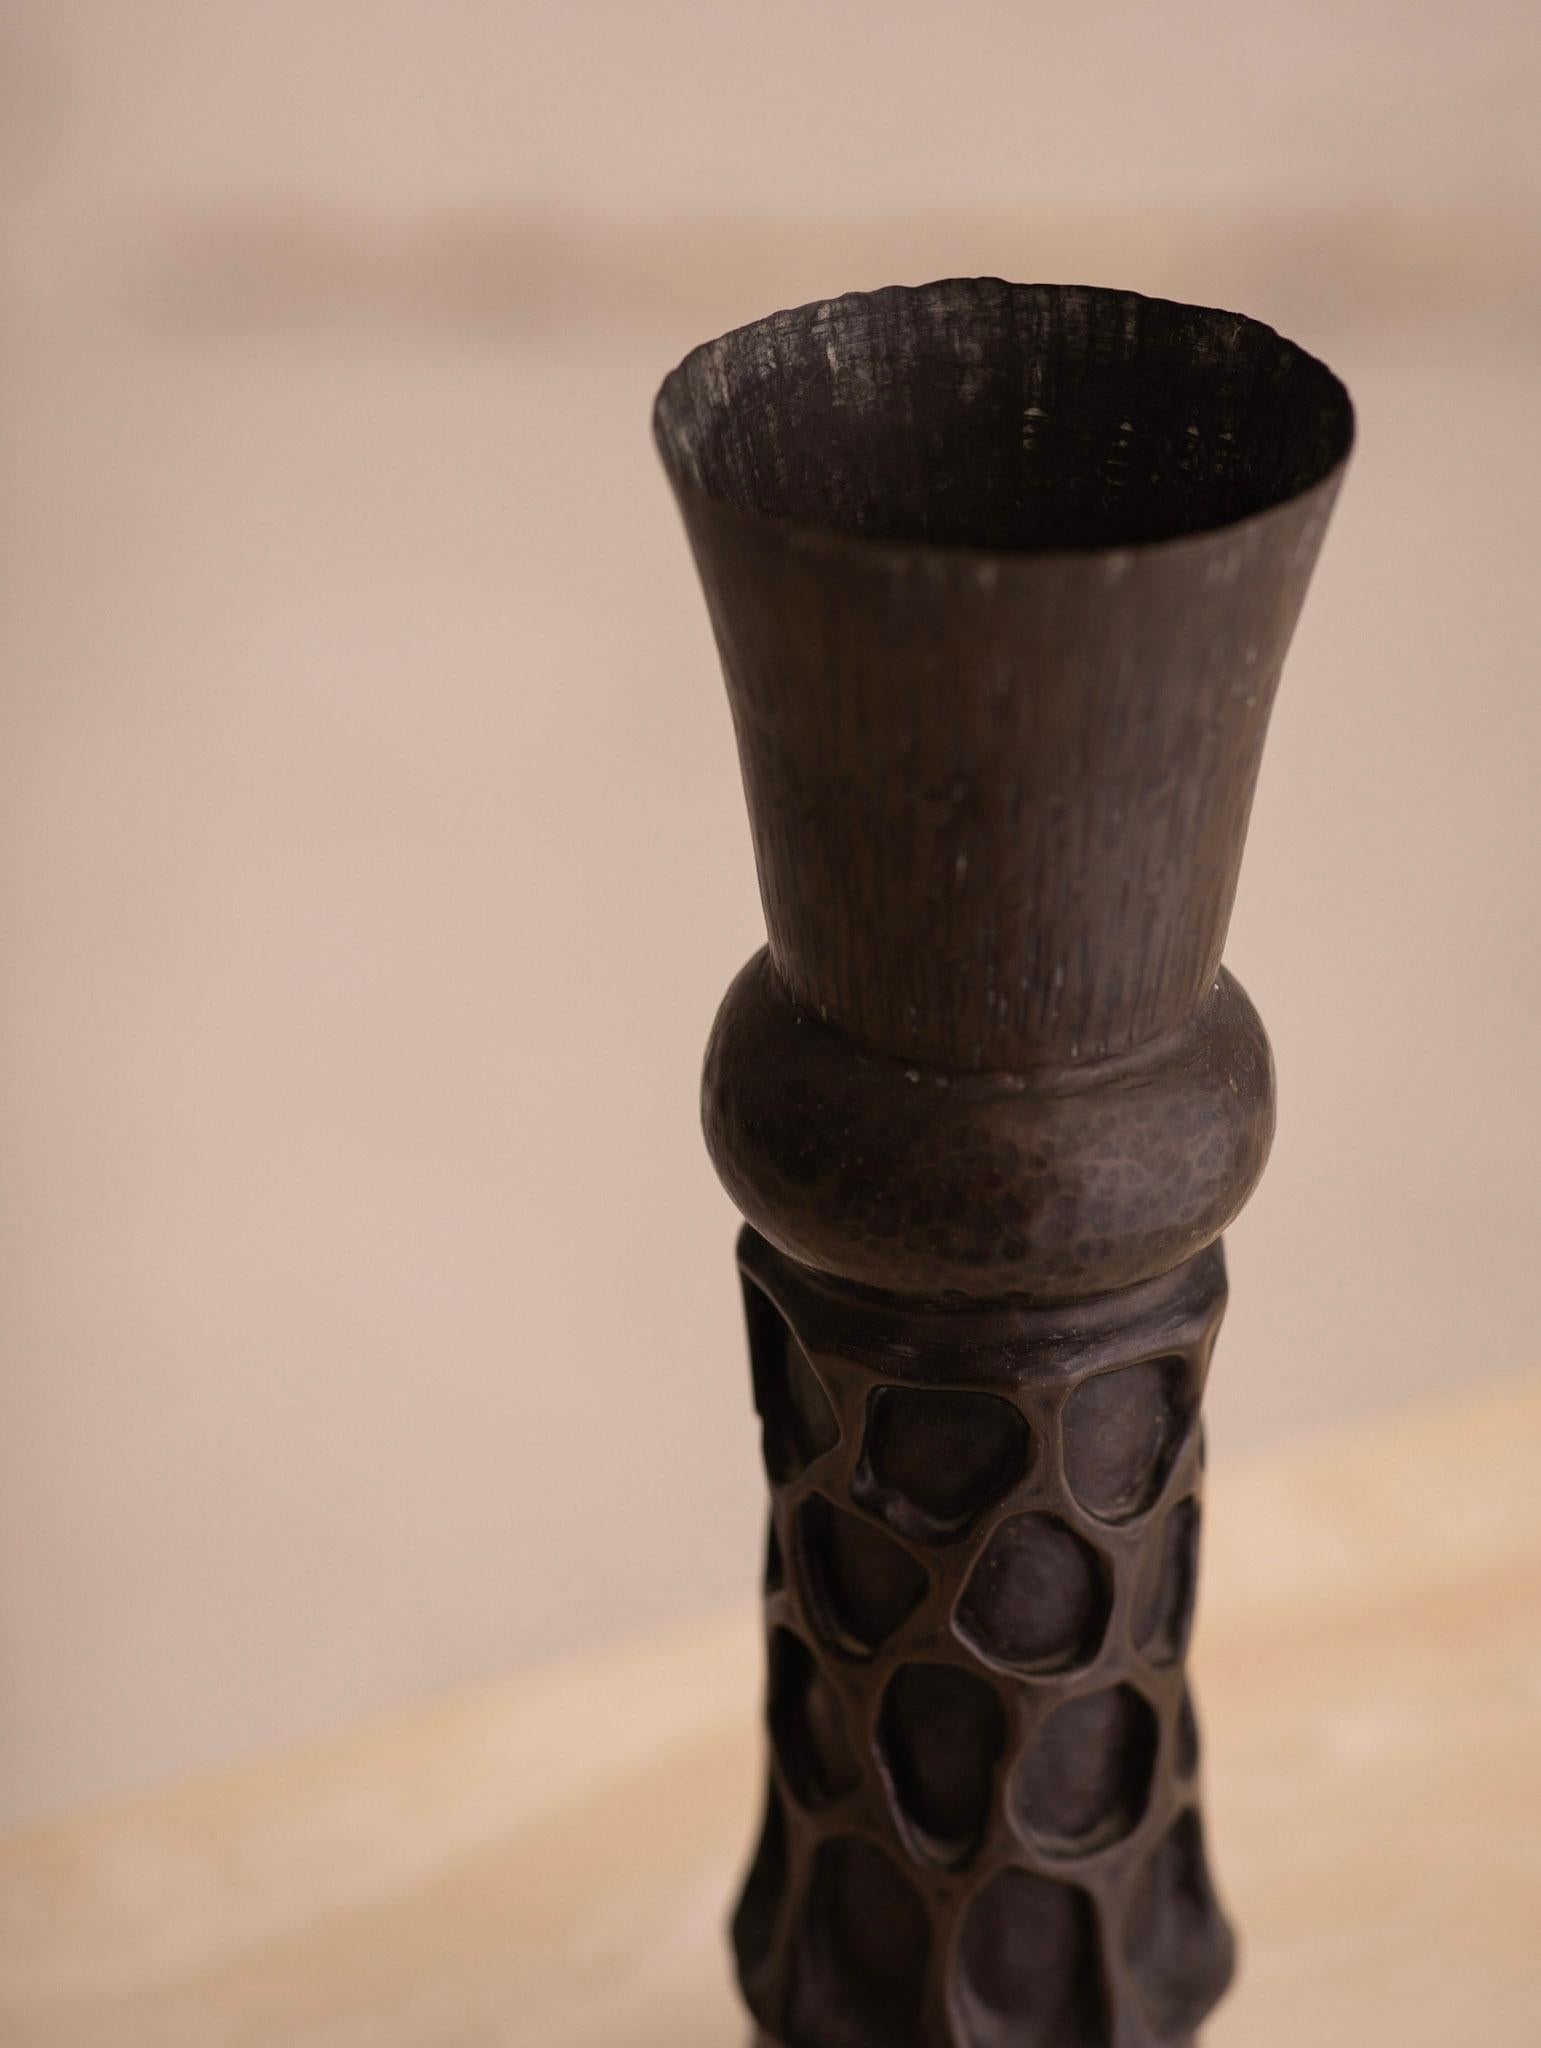 Hammered Brutalist Style Trench Art Vase